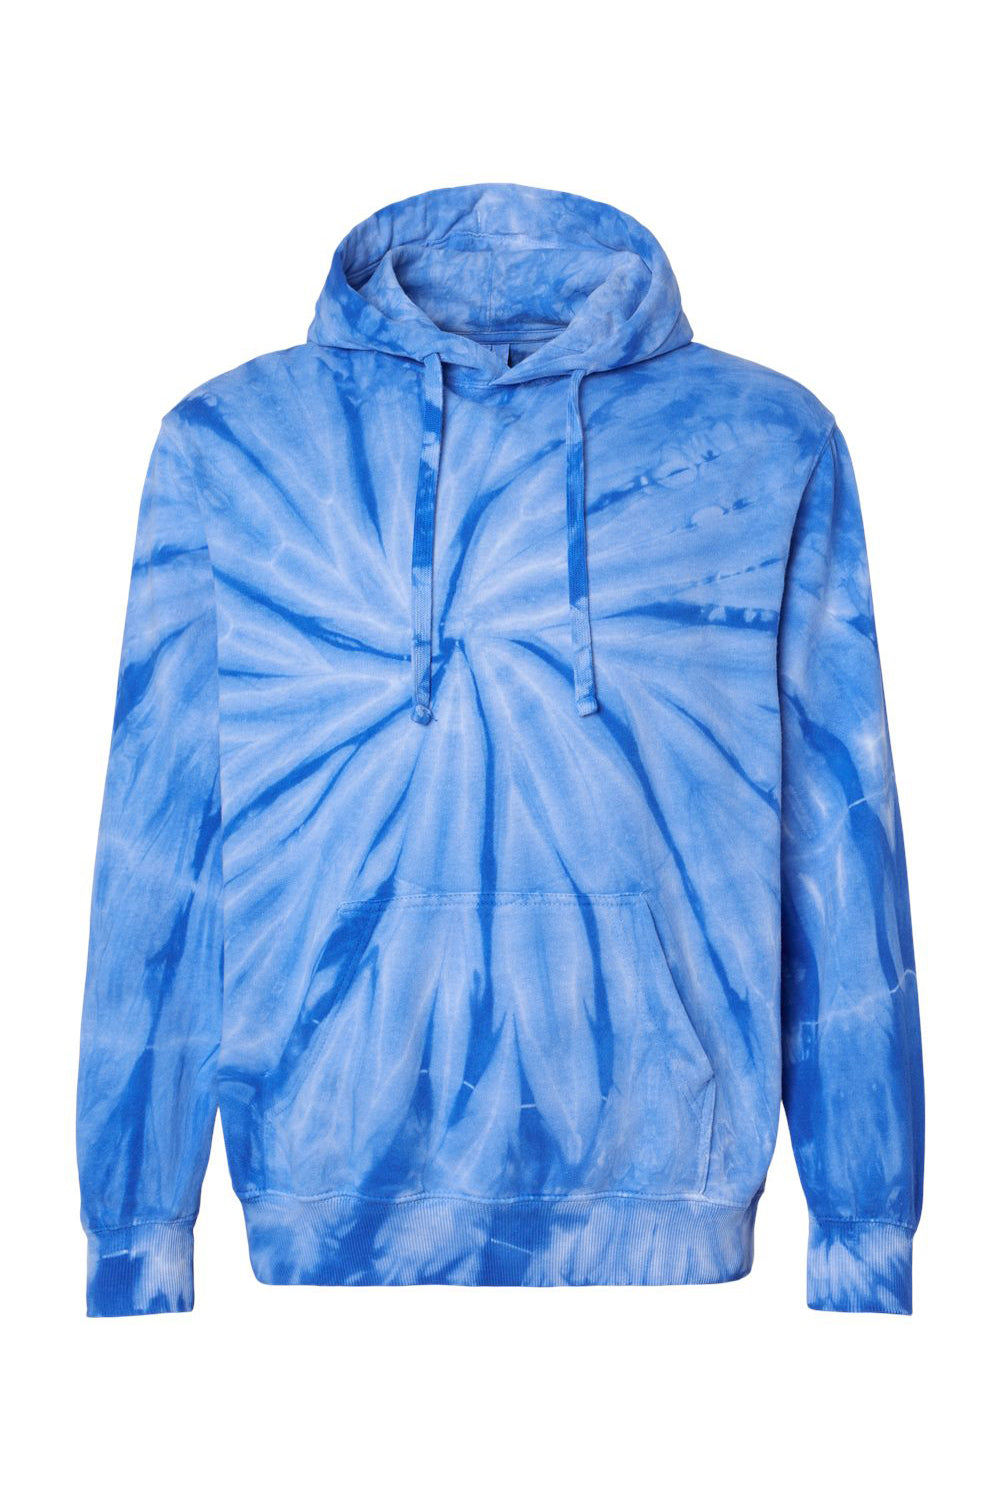 Dyenomite 854CY Mens Cyclone Tie Dyed Hooded Sweatshirt Hoodie Royal Blue Flat Front